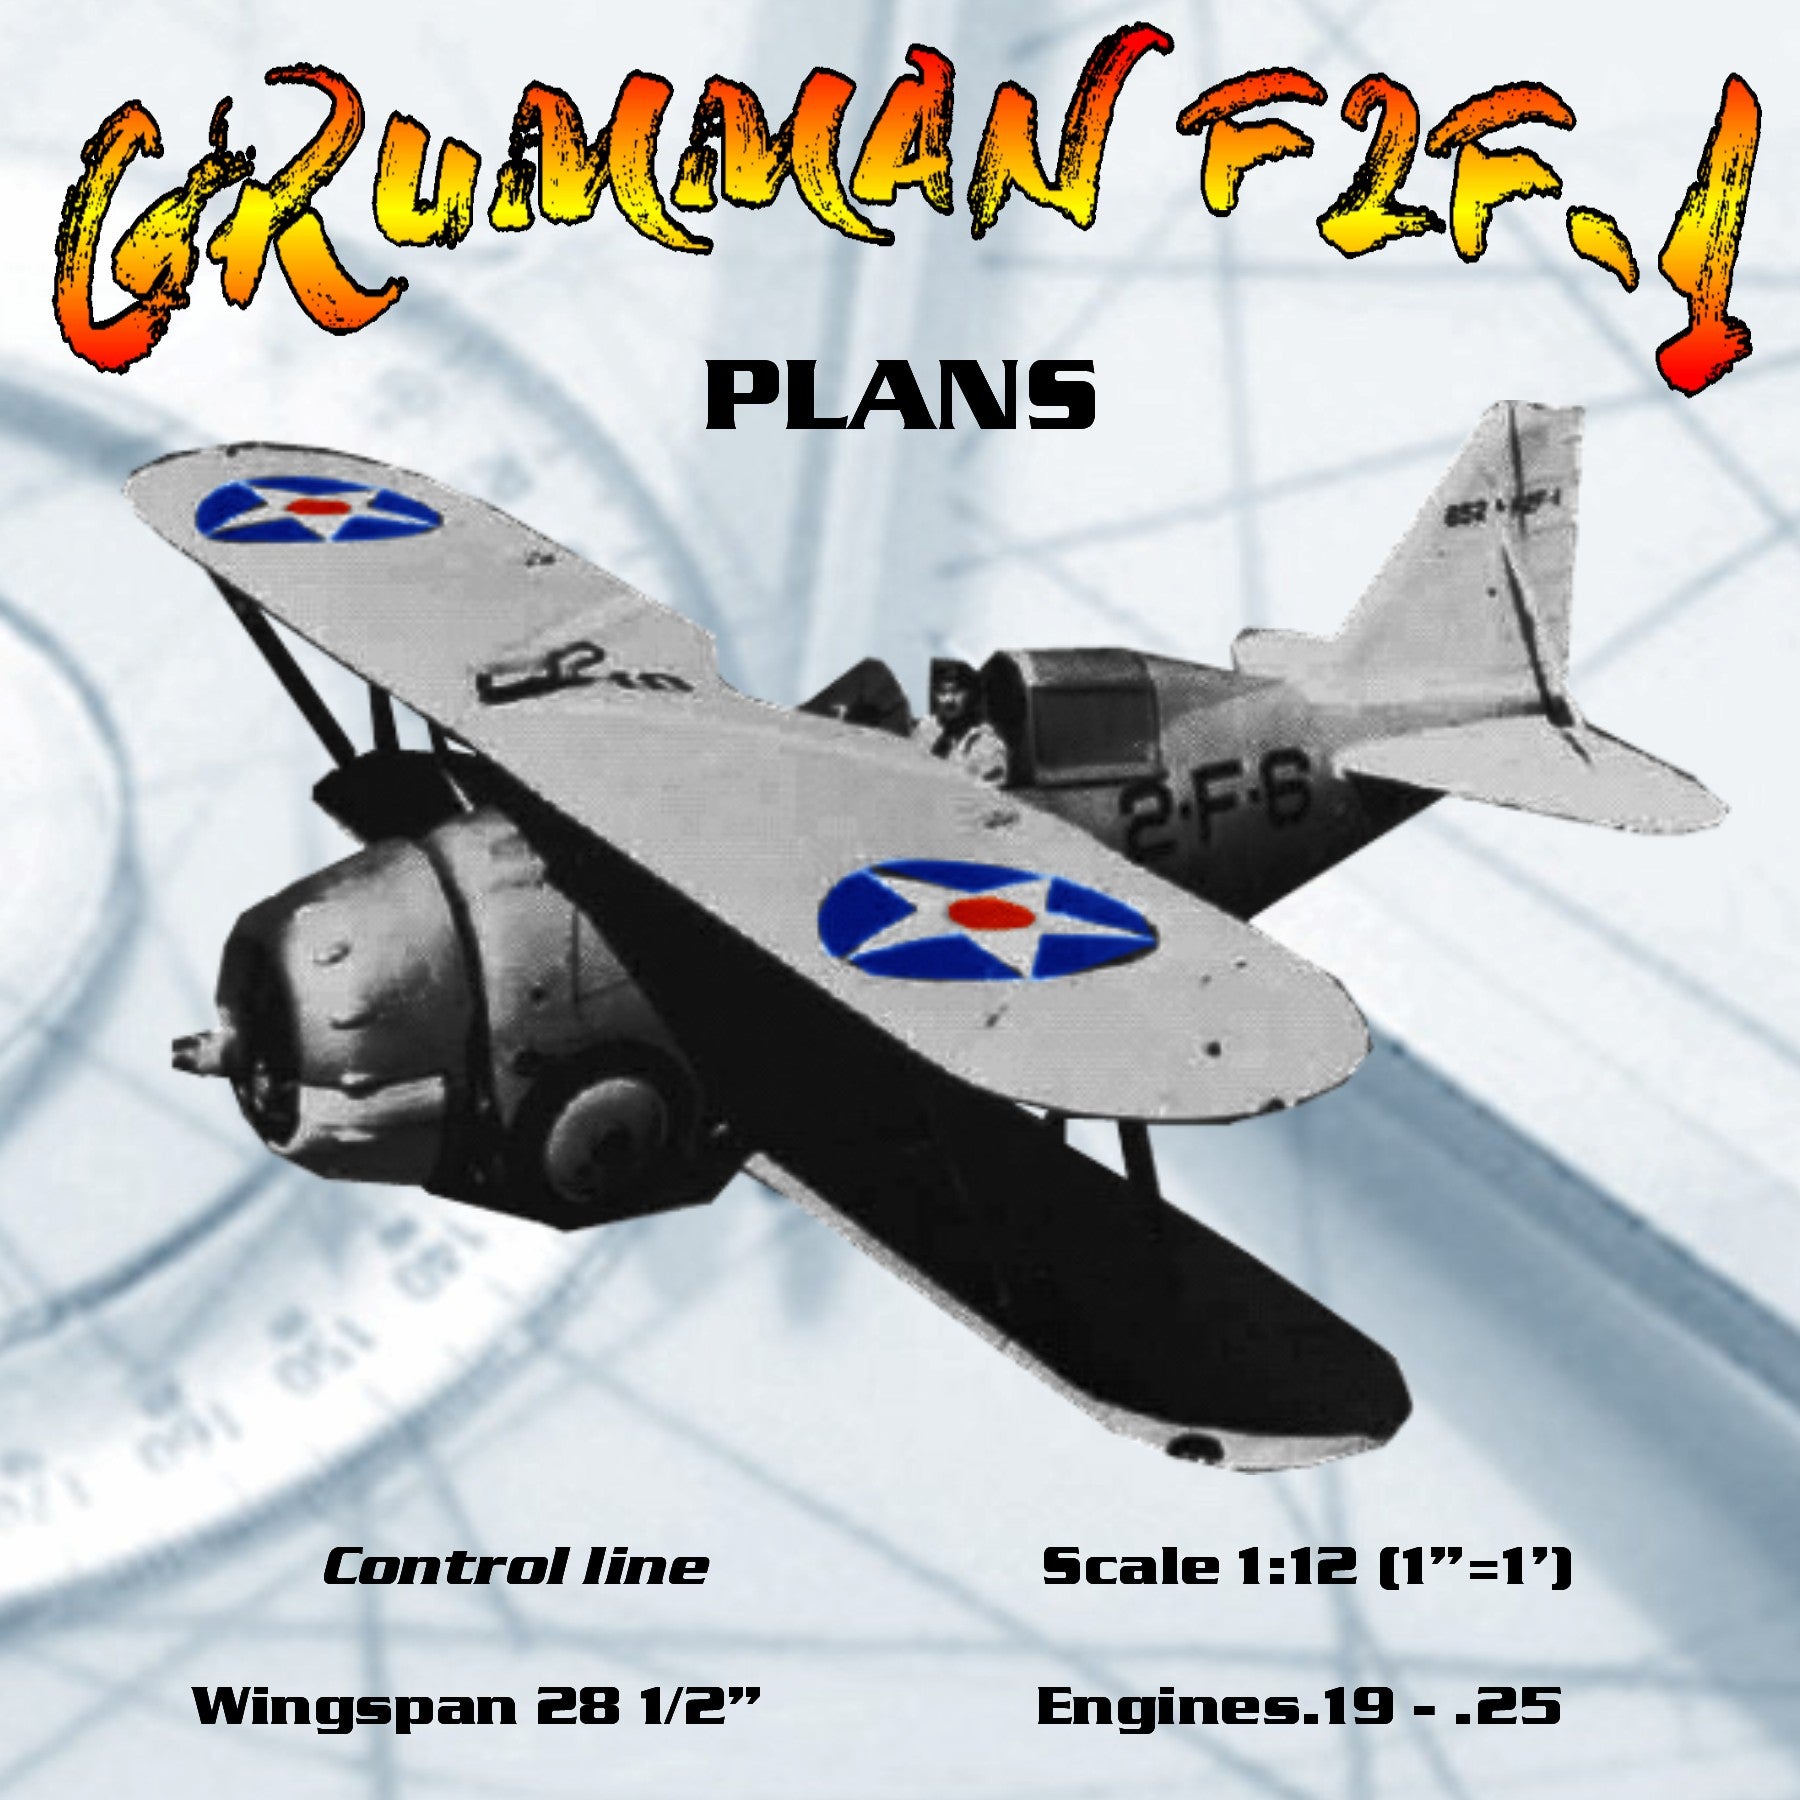 full size printed plans control line scale 1:12 (1”=1’) wingspan 28 1/2” grumman f2f-1